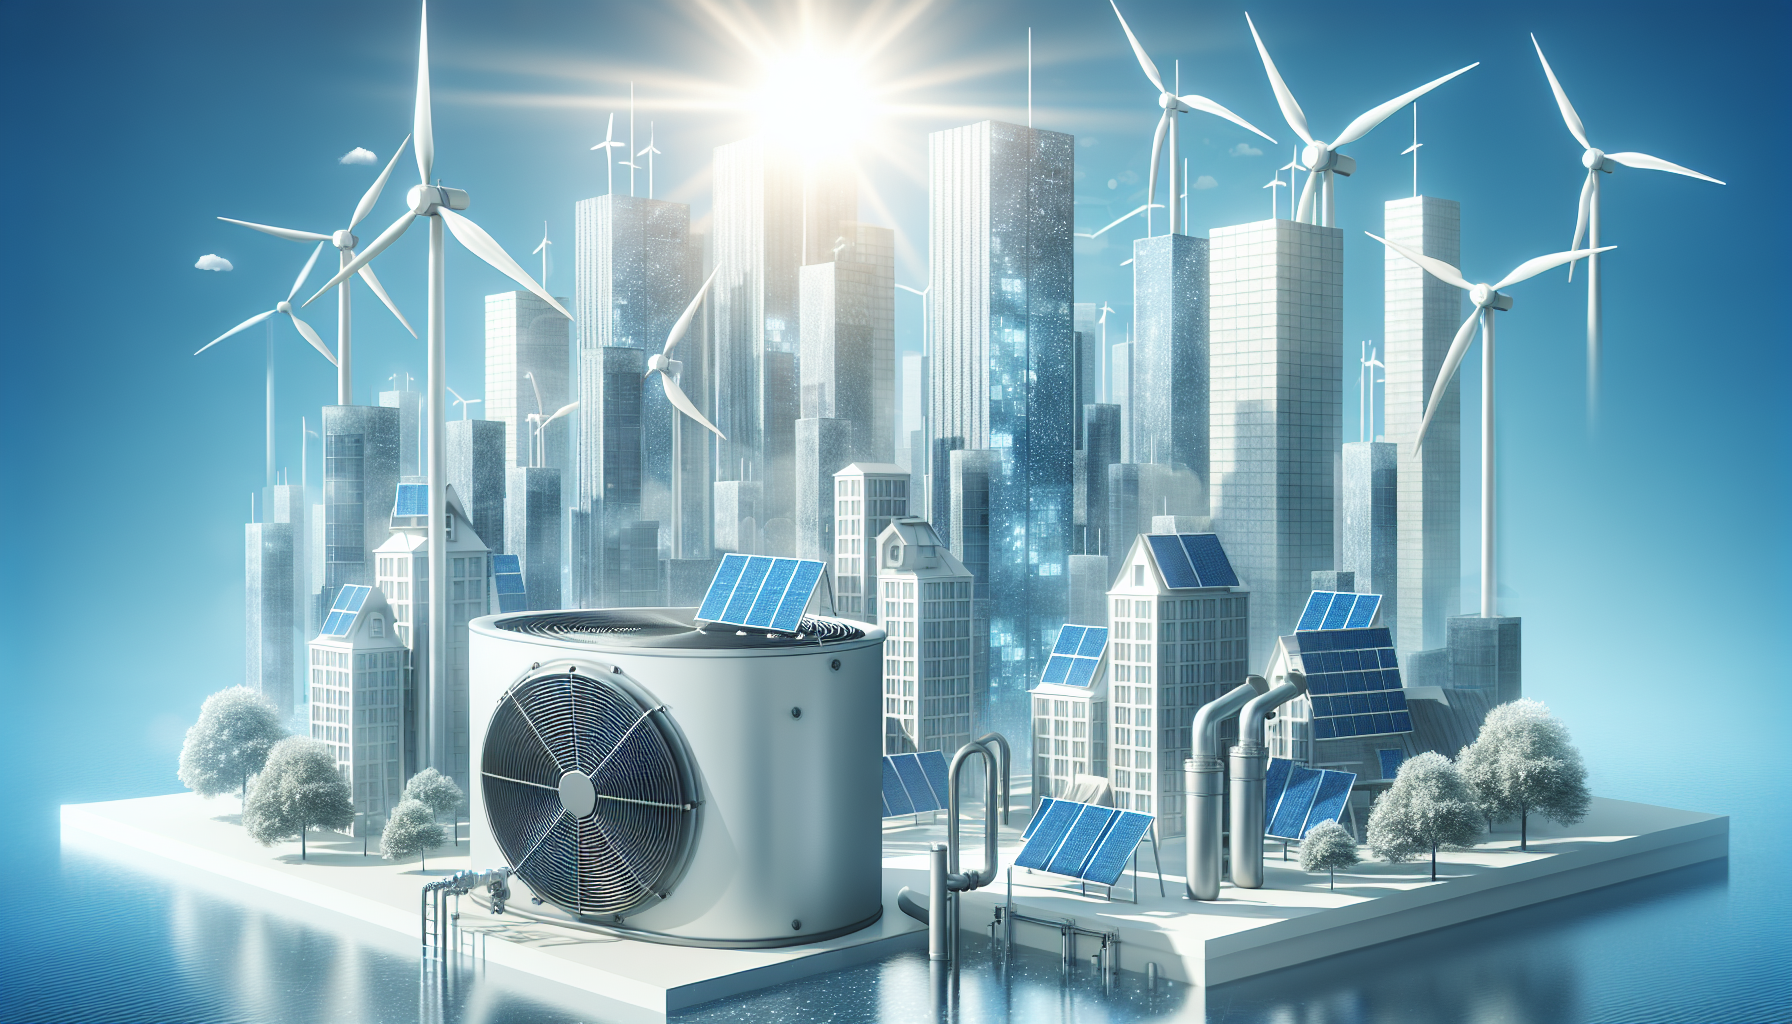 Maximizing energy efficiency with renewable energy sources